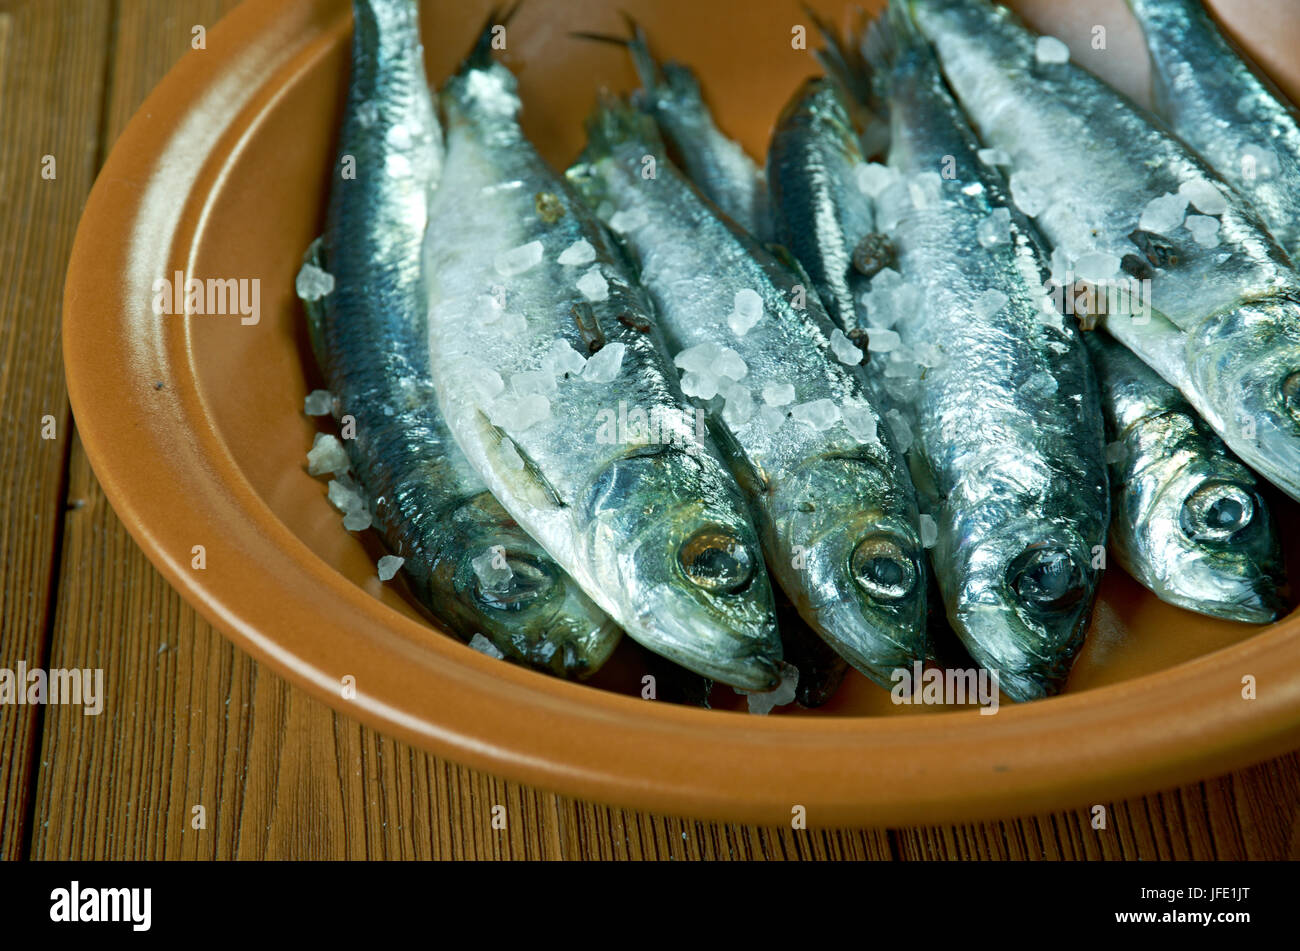 Surstromming Swedish  sour herring Stock Photo